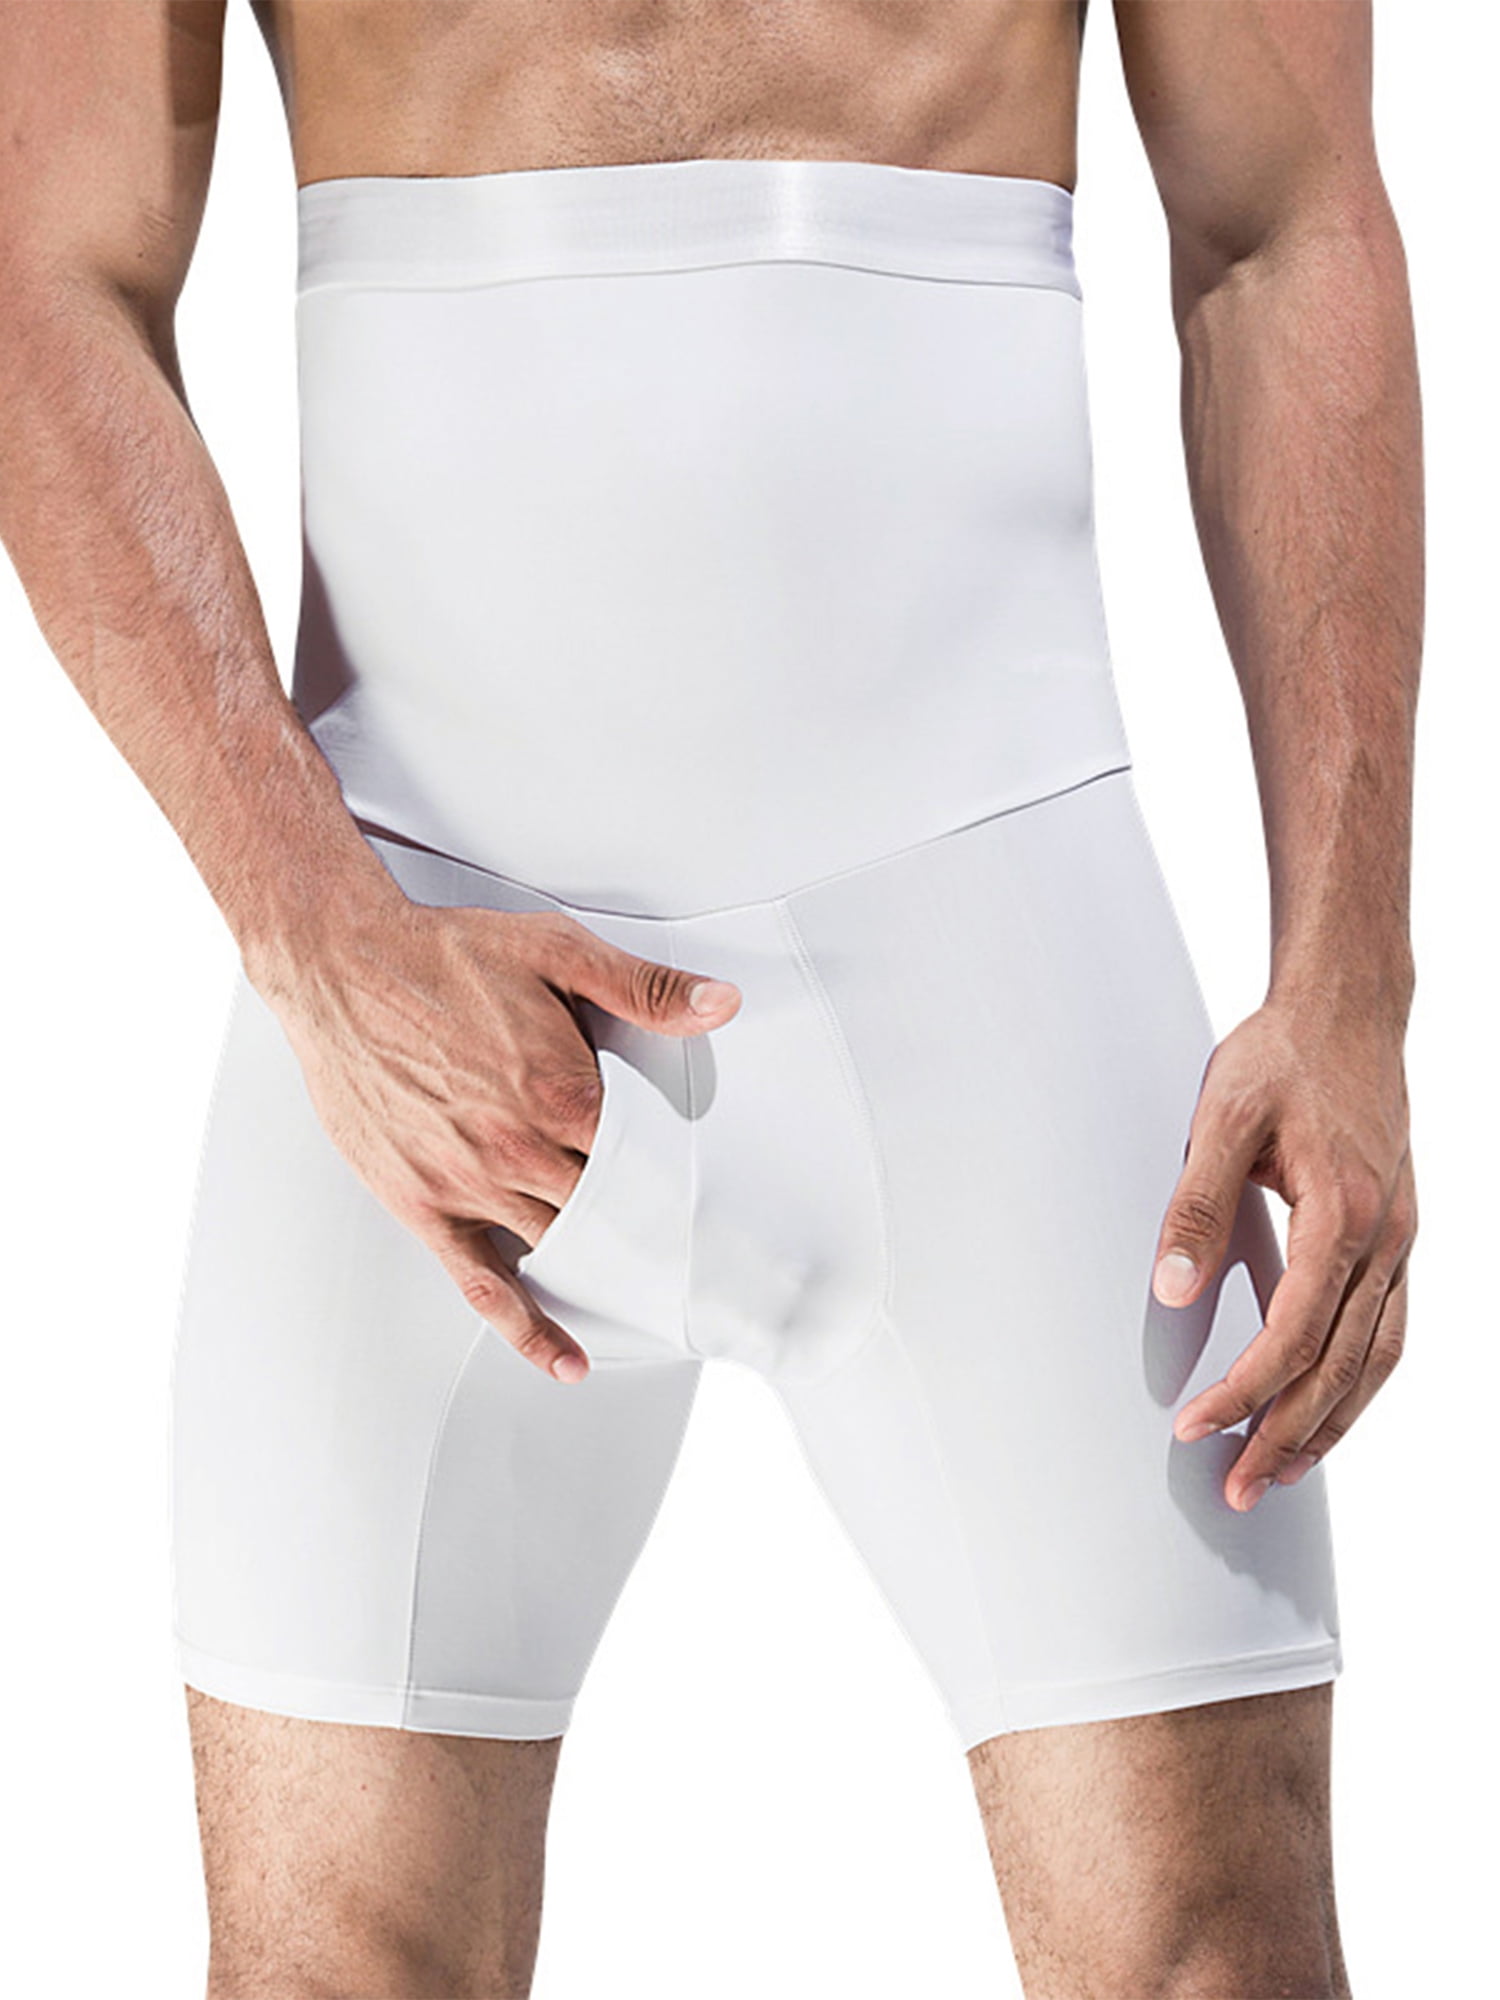 Details about   Men's Body Shaper Tummy Control Slimming Shapewear Shorts High Waist Underwear